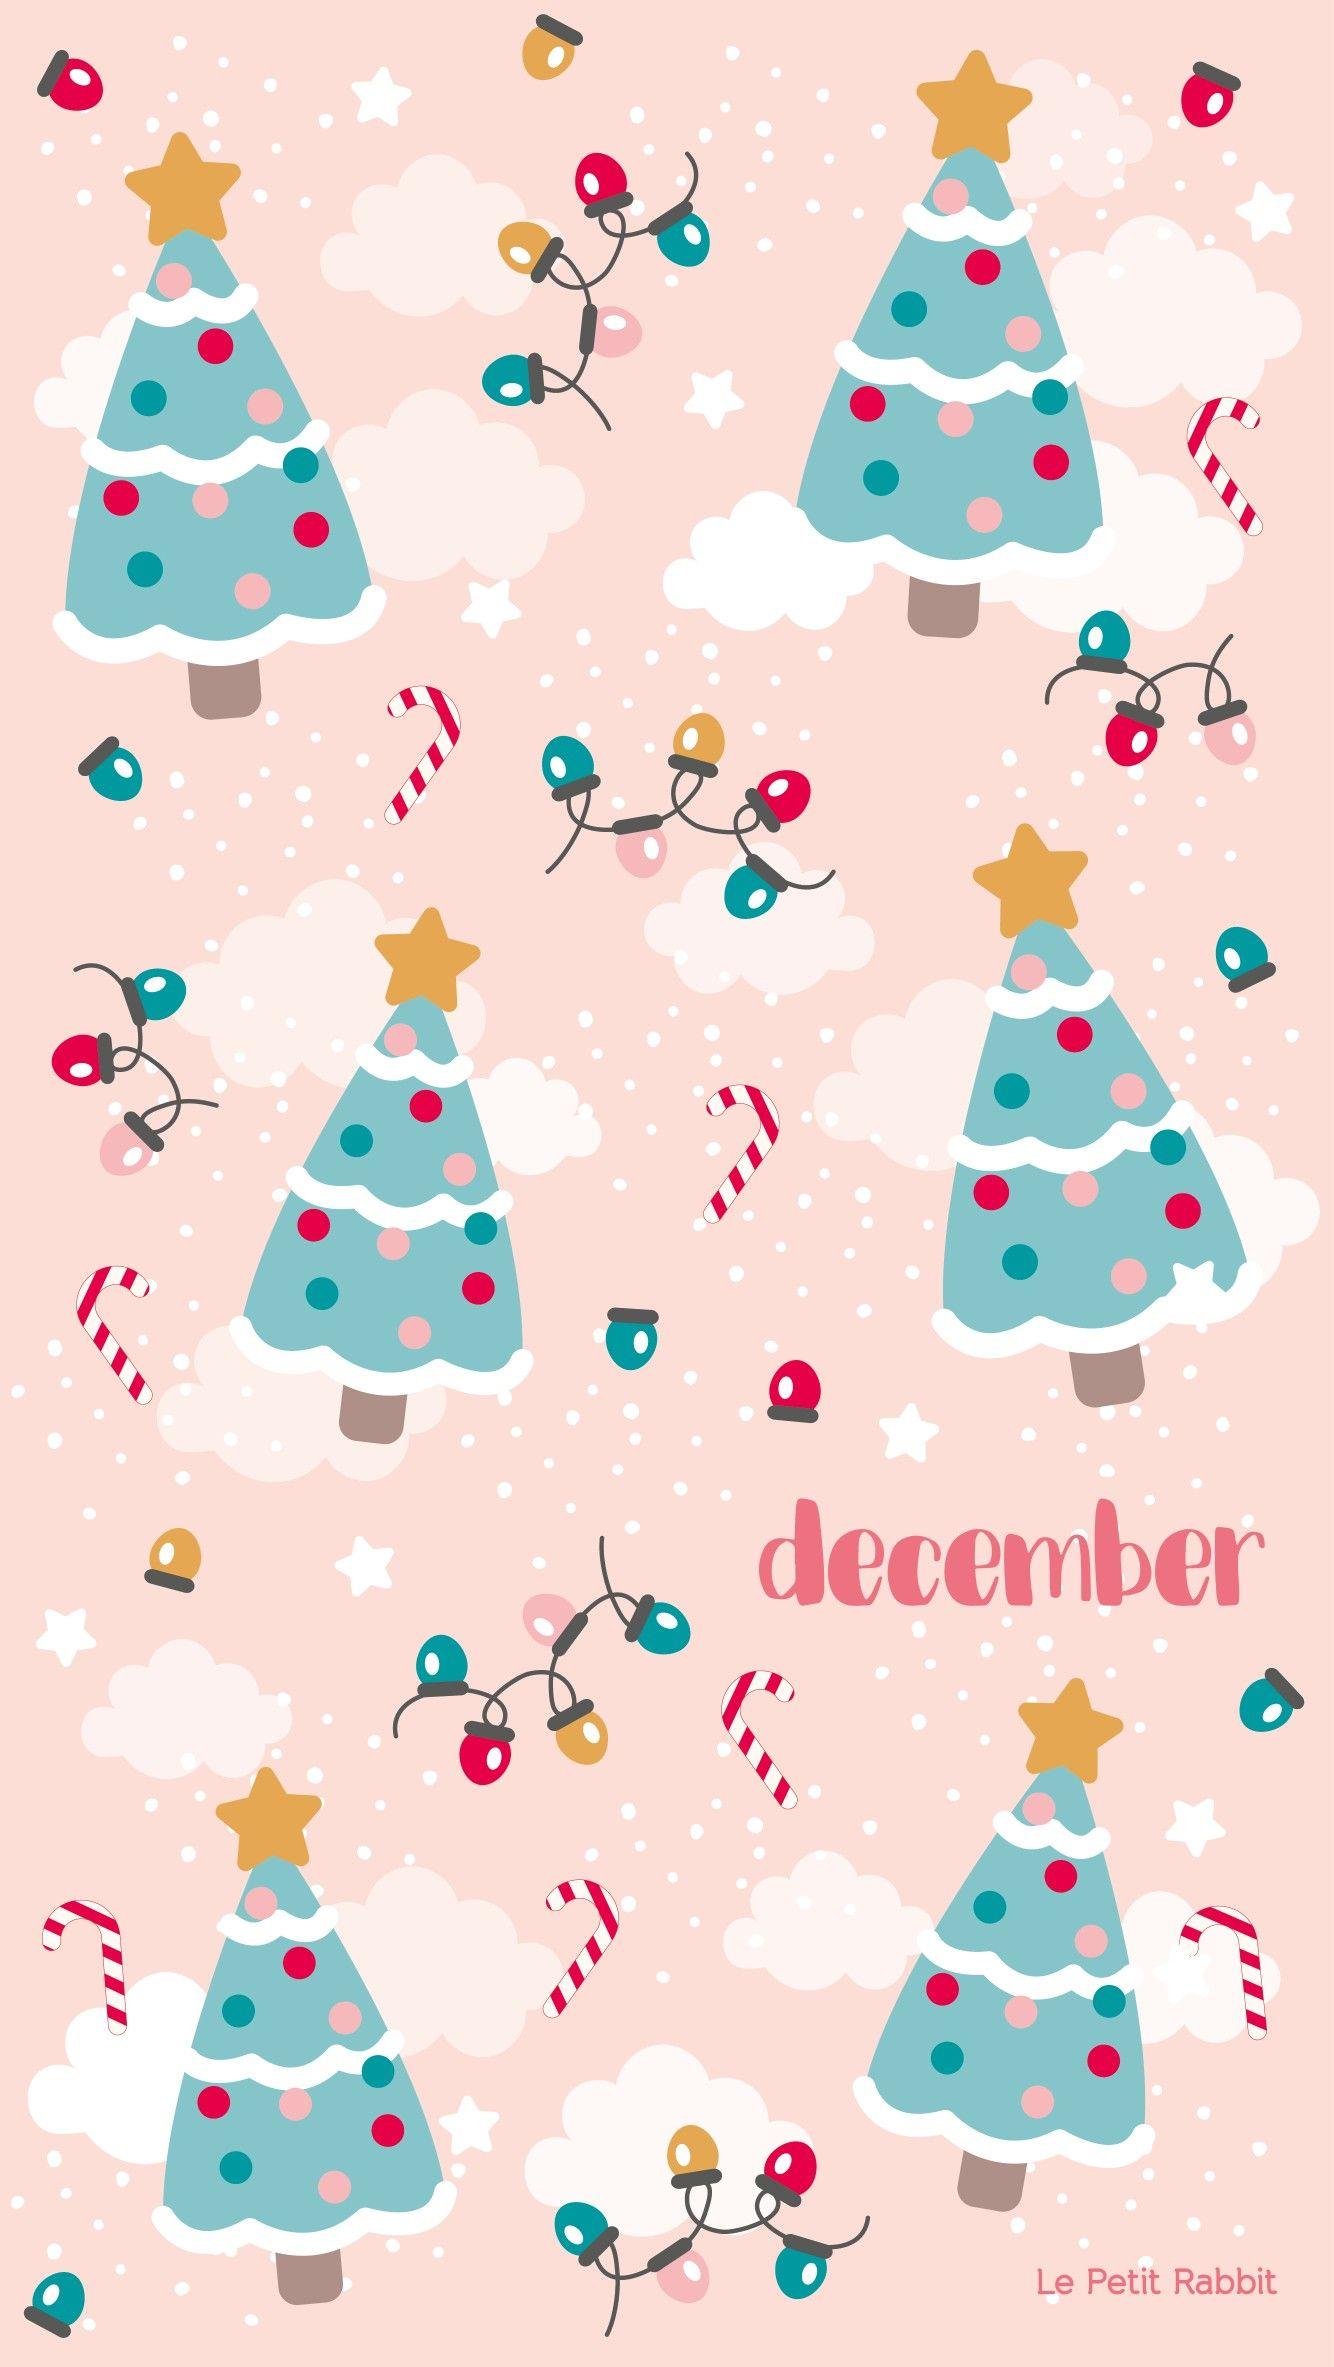 Christmas cute wallpaper ideas. christmas wallpaper, cute wallpaper, holiday wallpaper